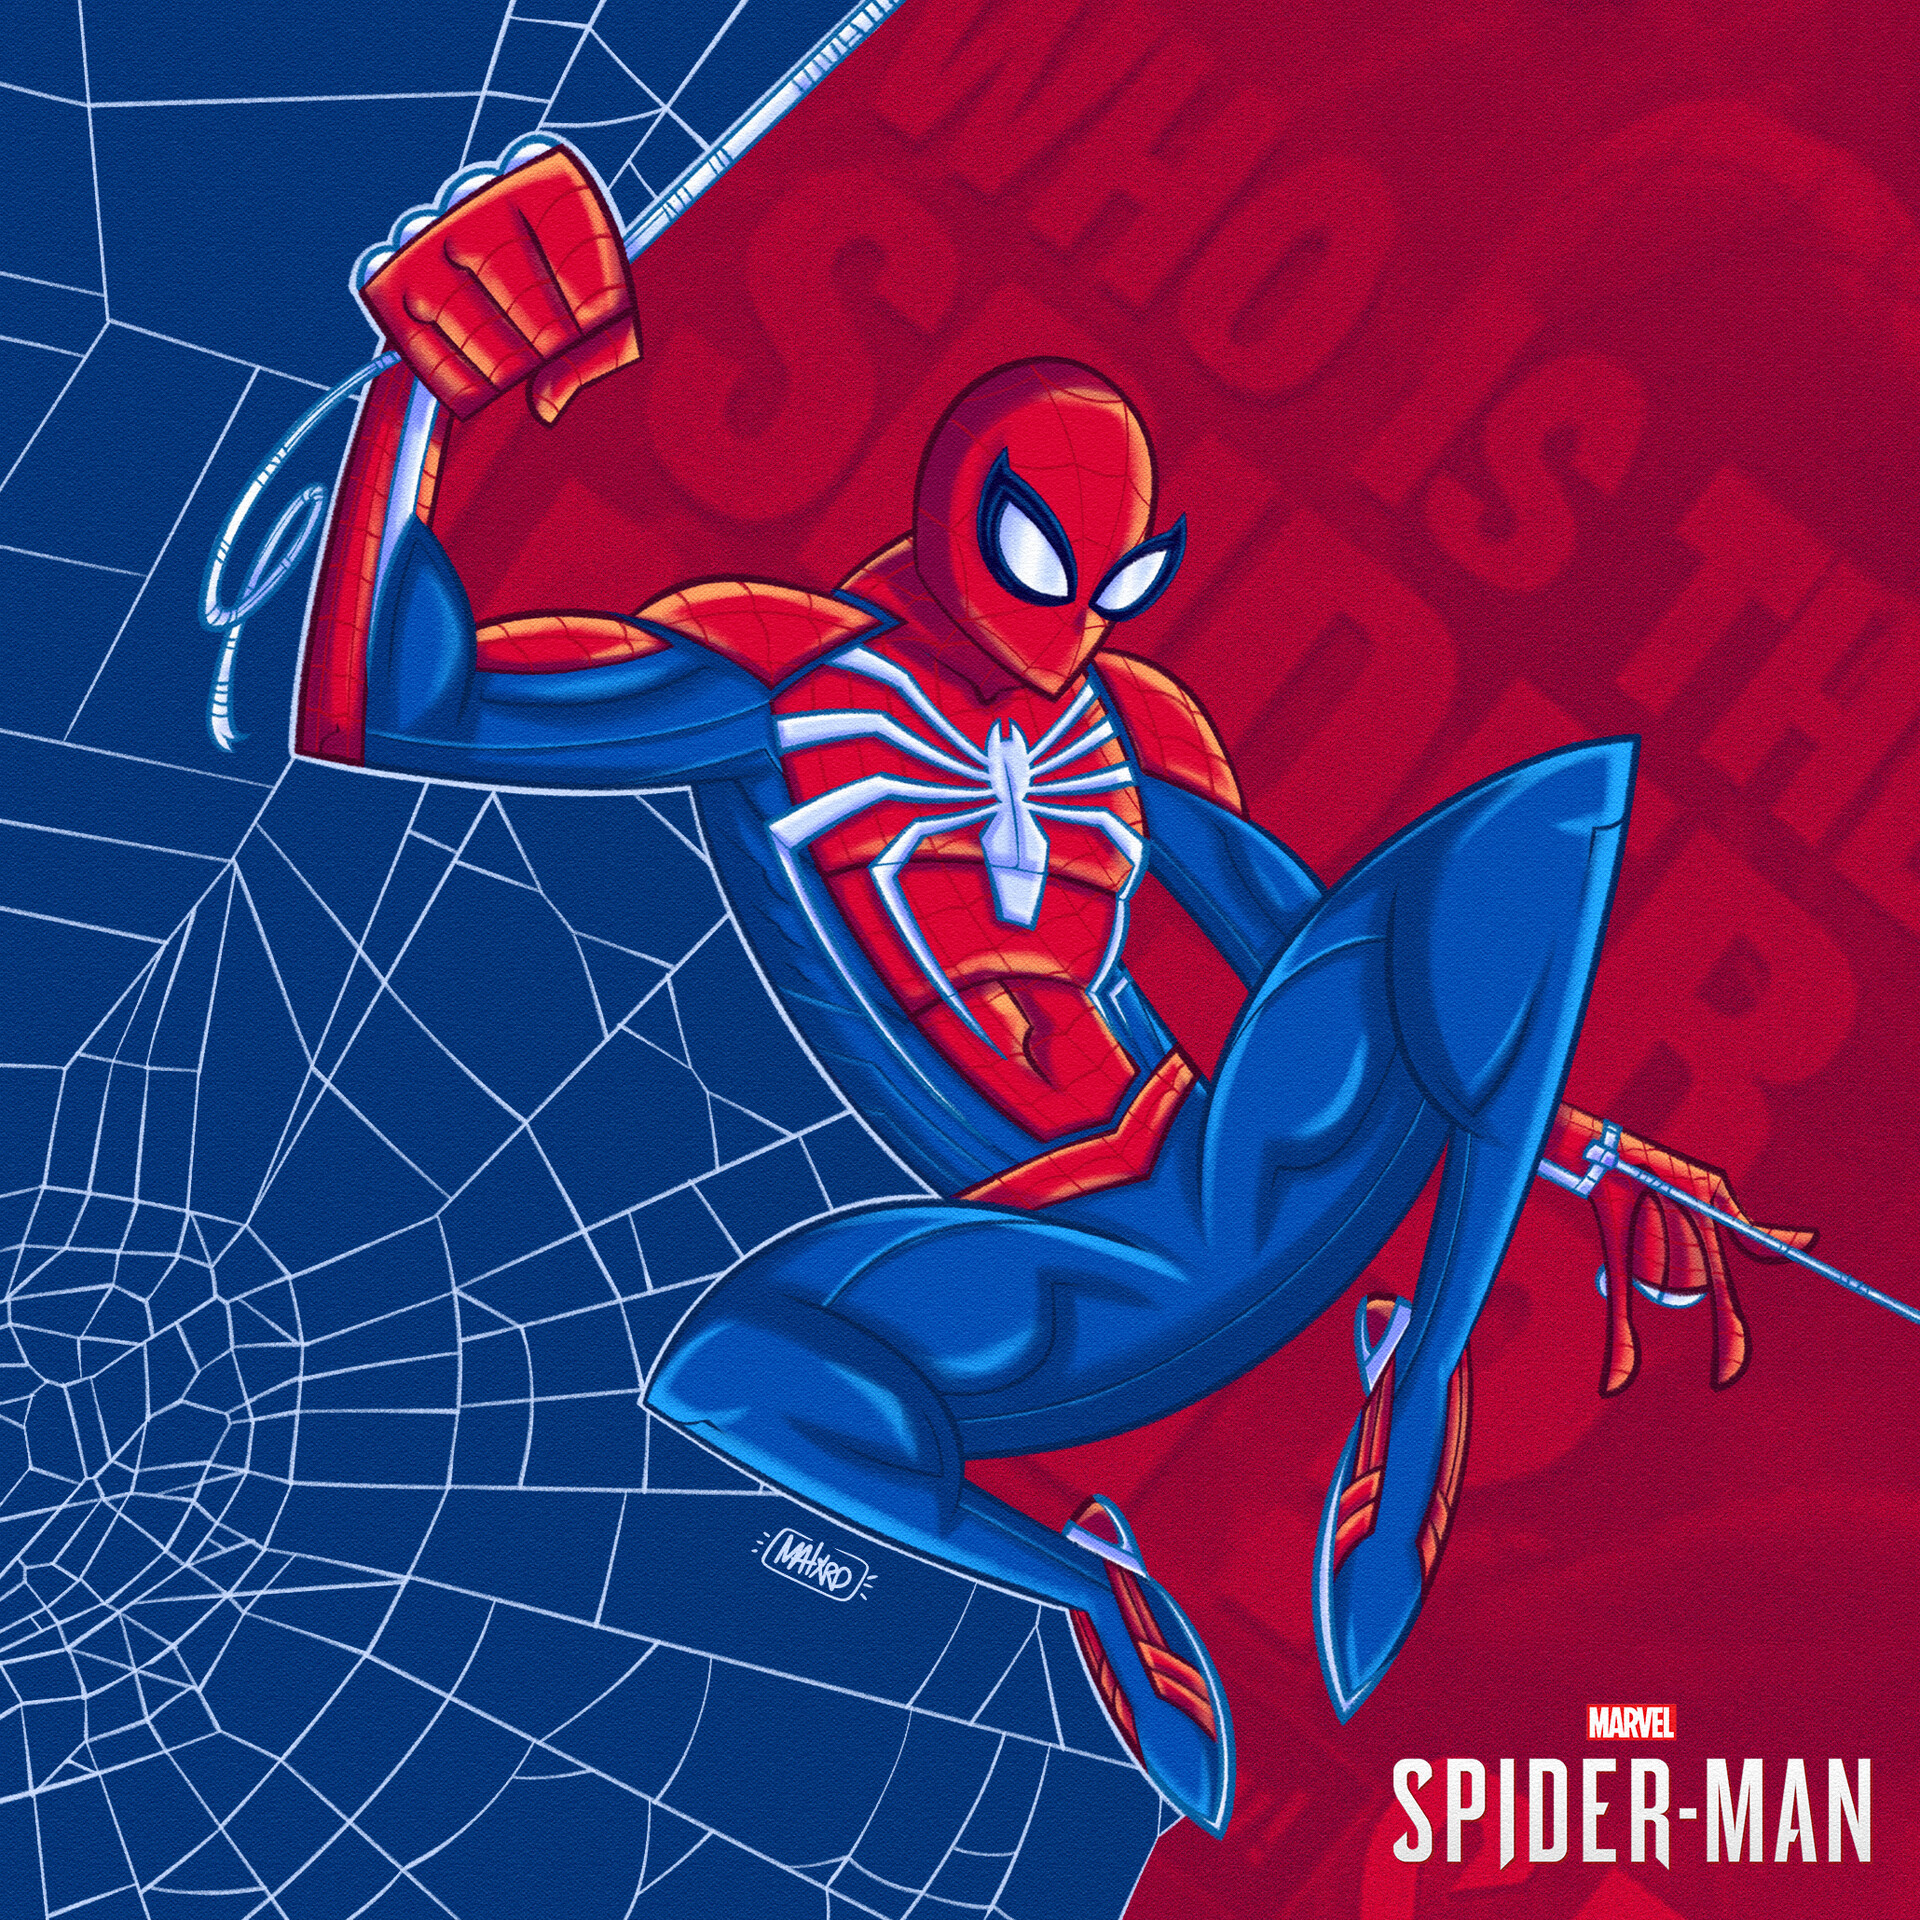 ArtStation - Marvel's Spider-Man PS4/PS5 Promotional Art